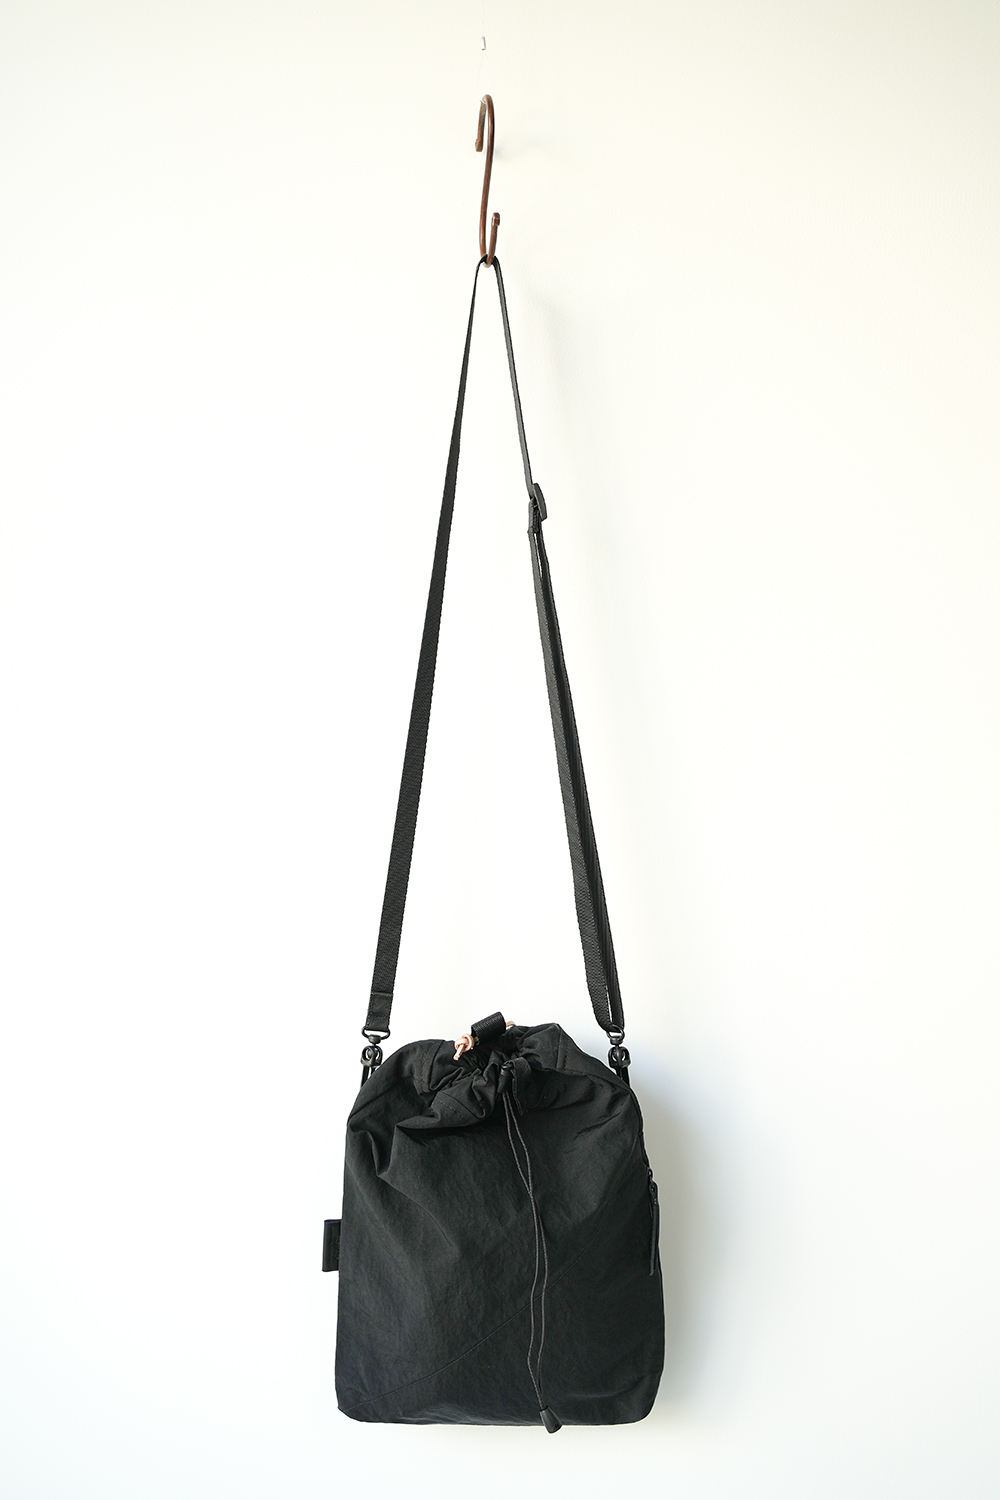 span nylon draw string shoulder bag S